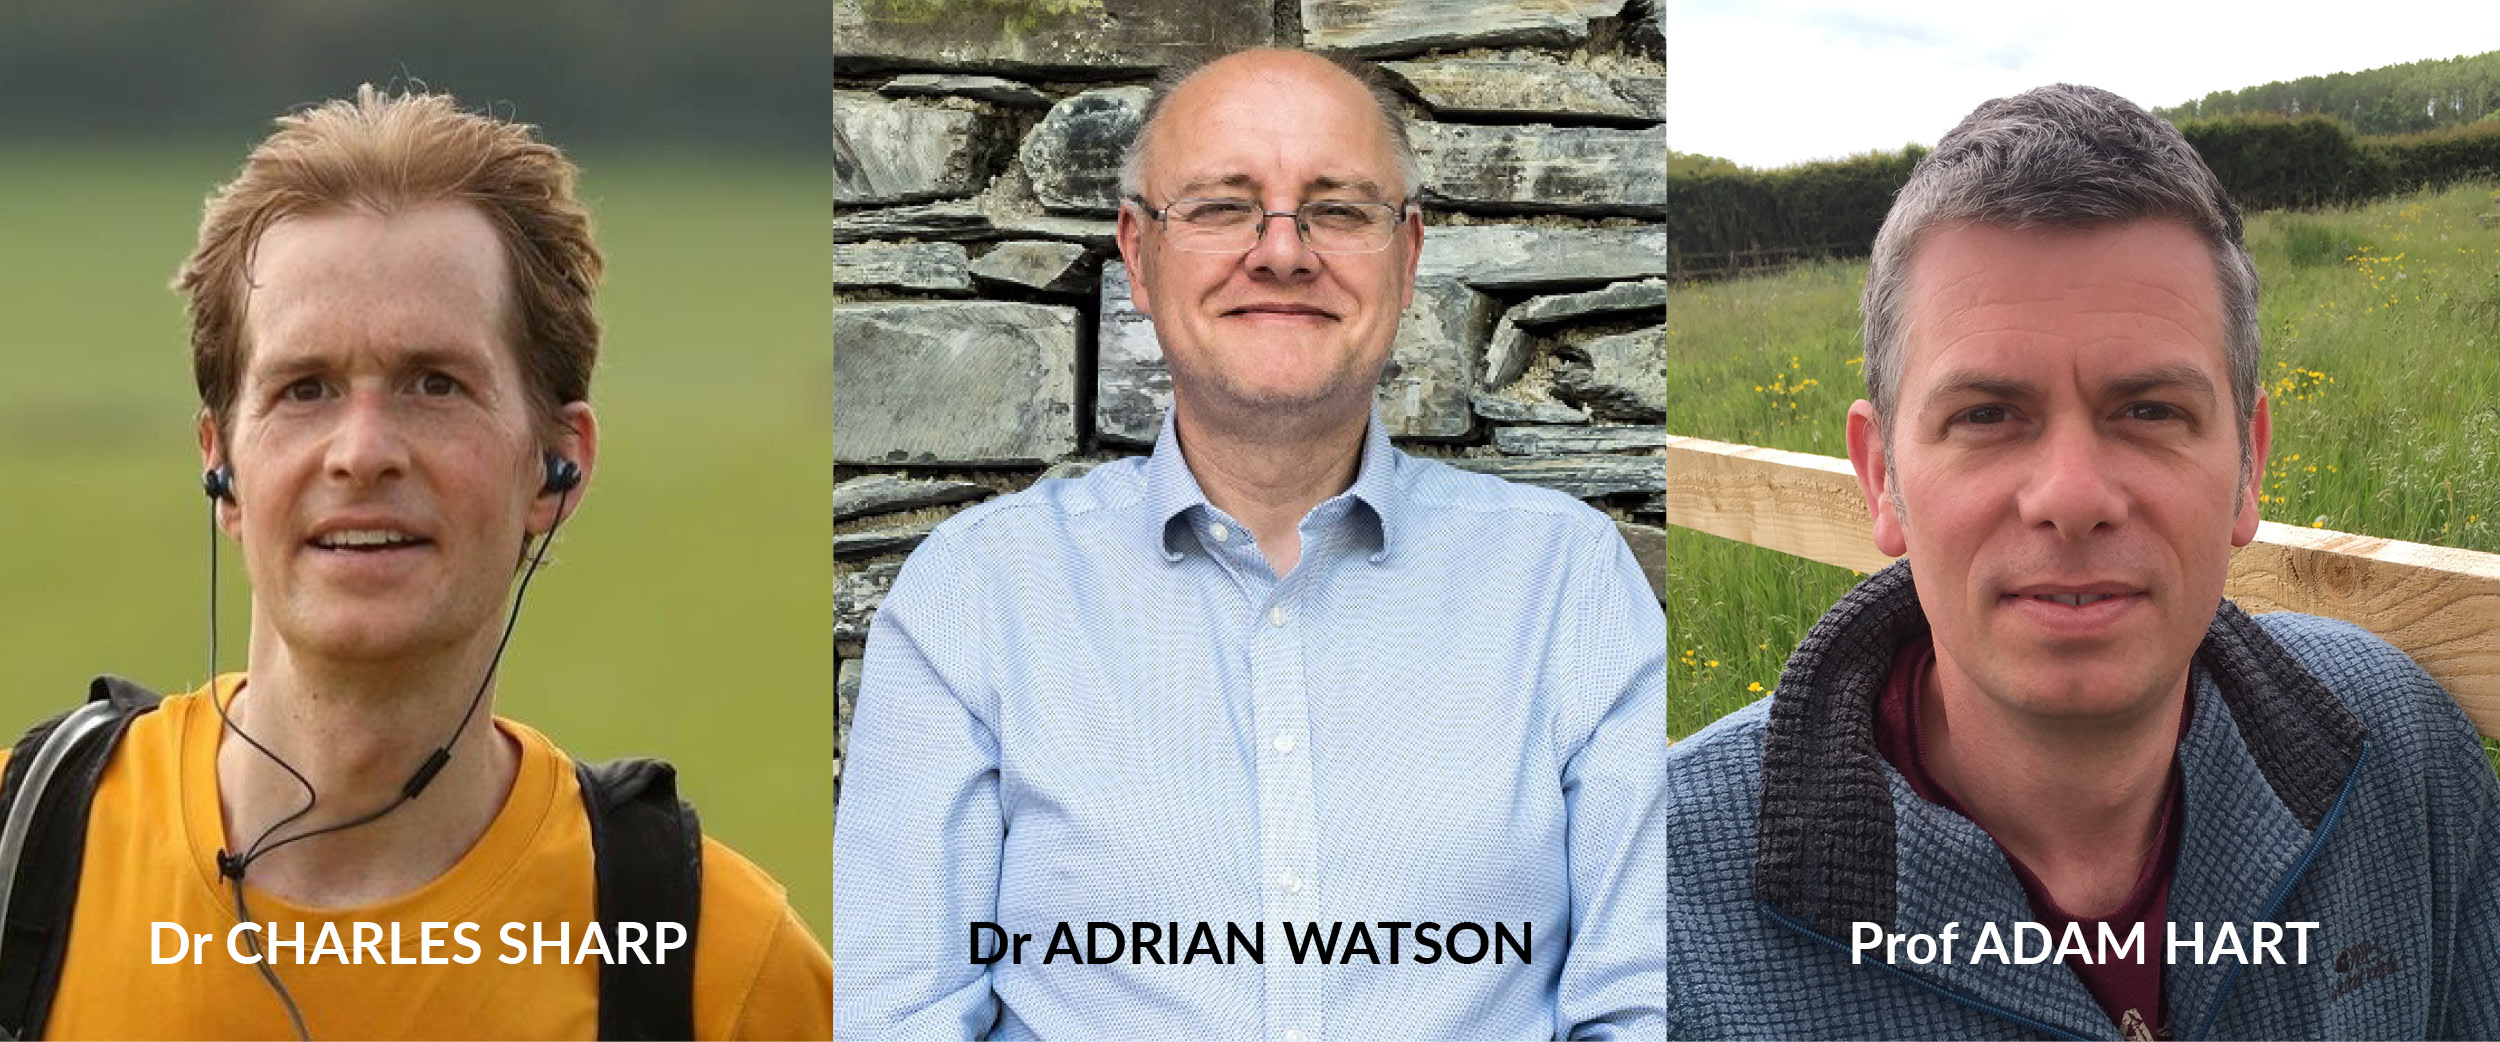 Dr Charles Sharp, Dr Adrian Watson, Prof Adam Hart